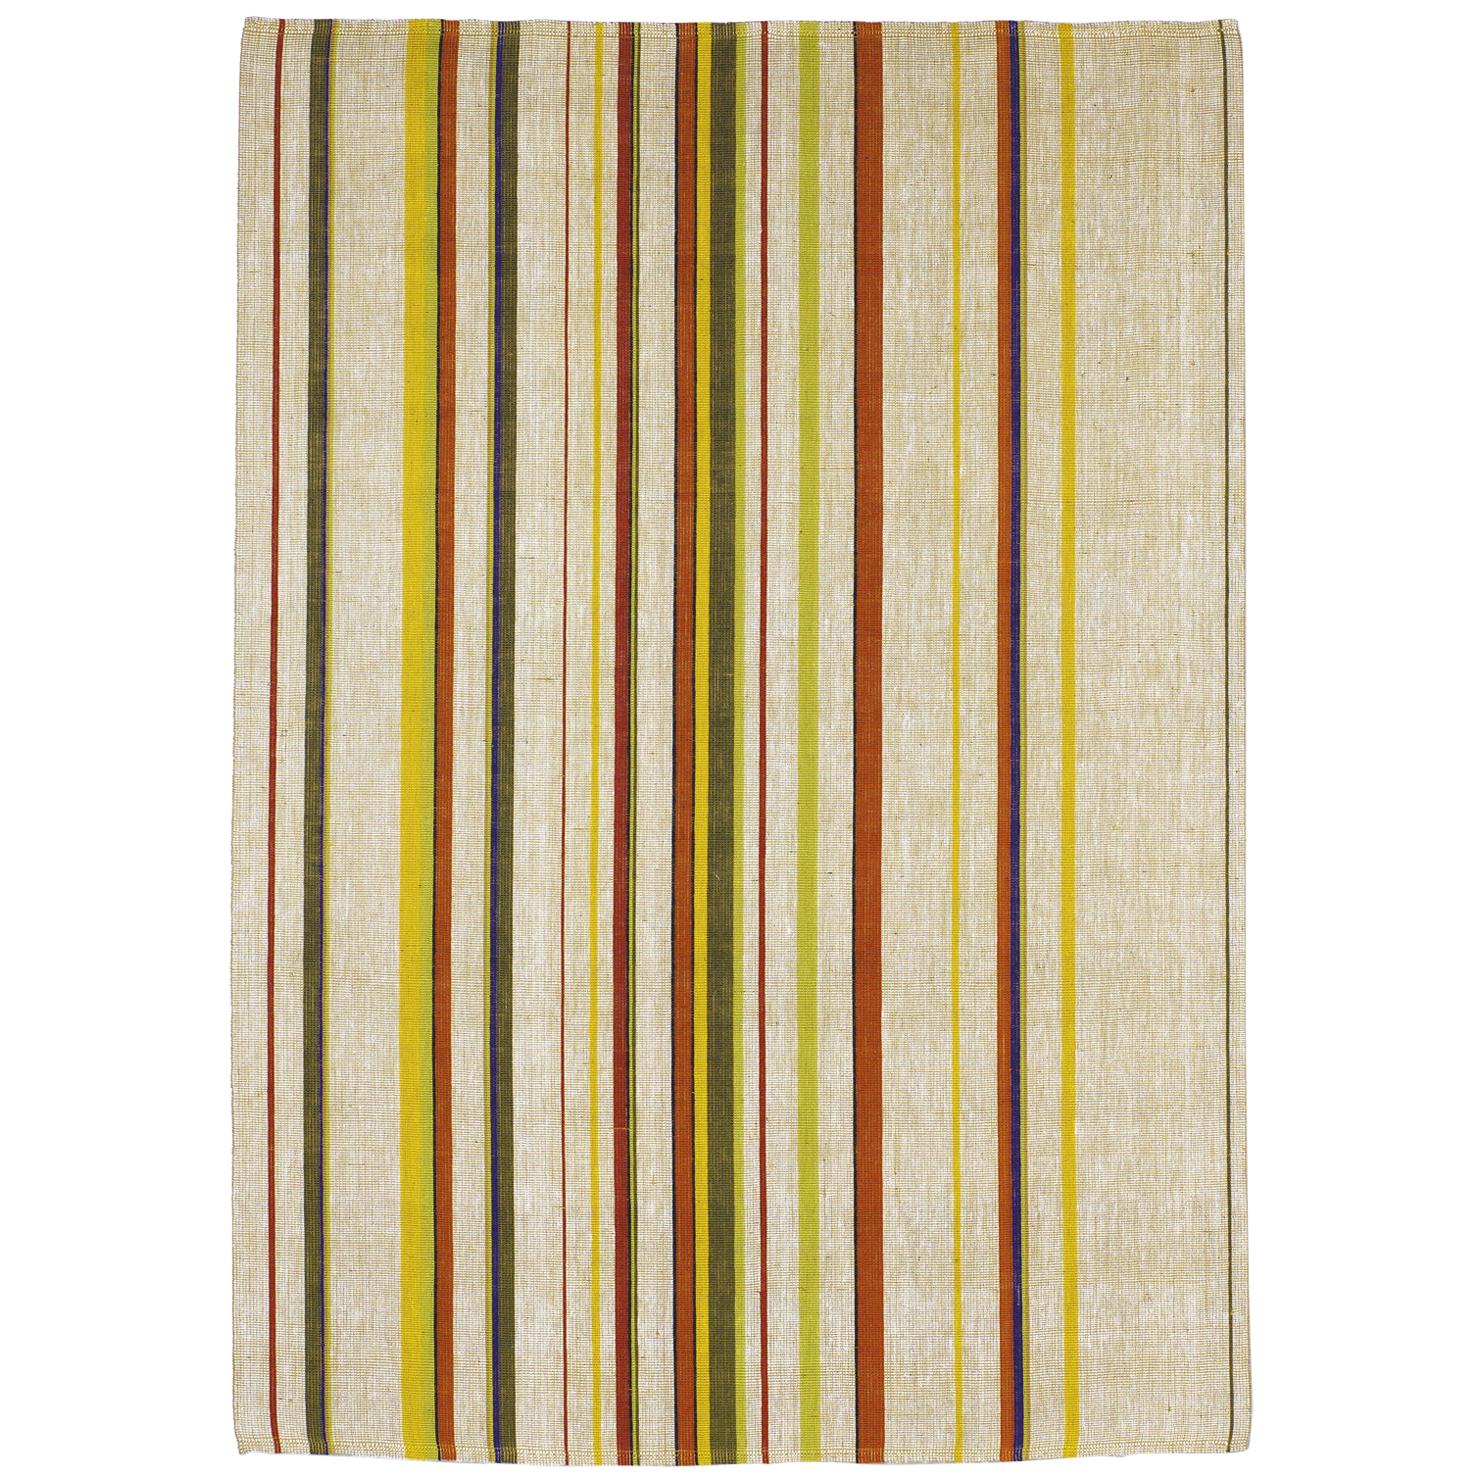 Contemporary Thin Striped Multi-Color Jute Rug by Deanna Comellini 170x240cm  For Sale